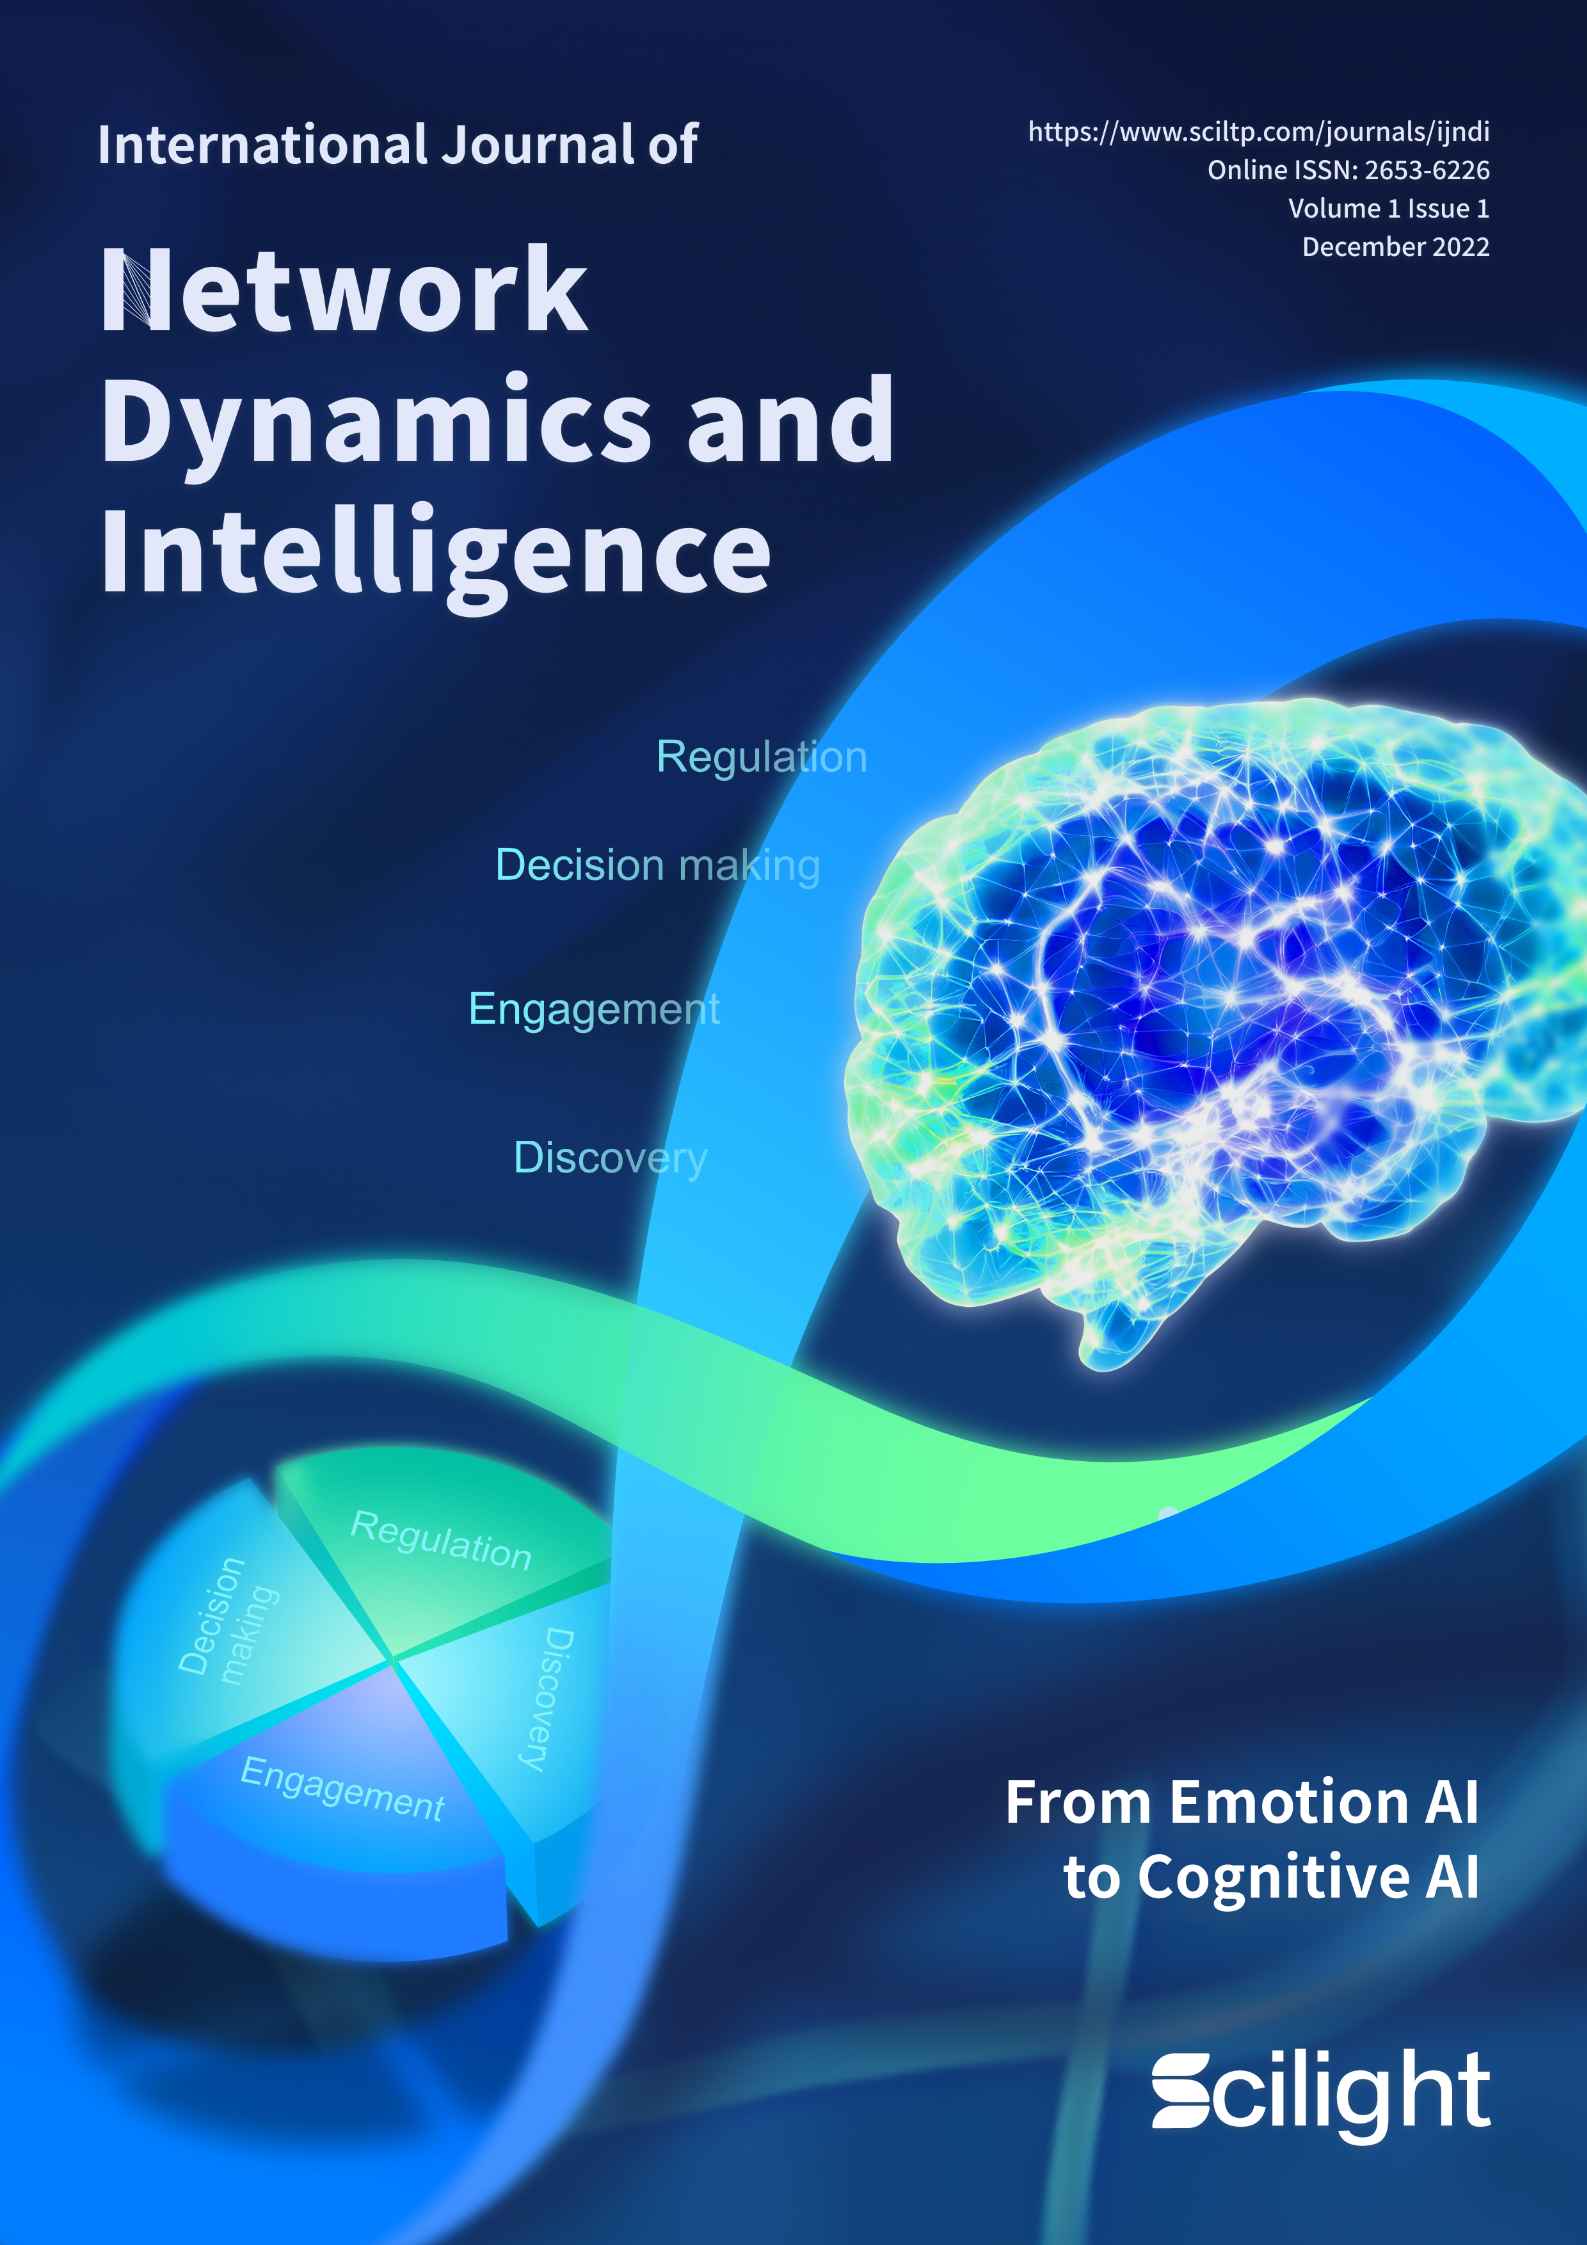 International Journal of Network Dynamics and Intelligence